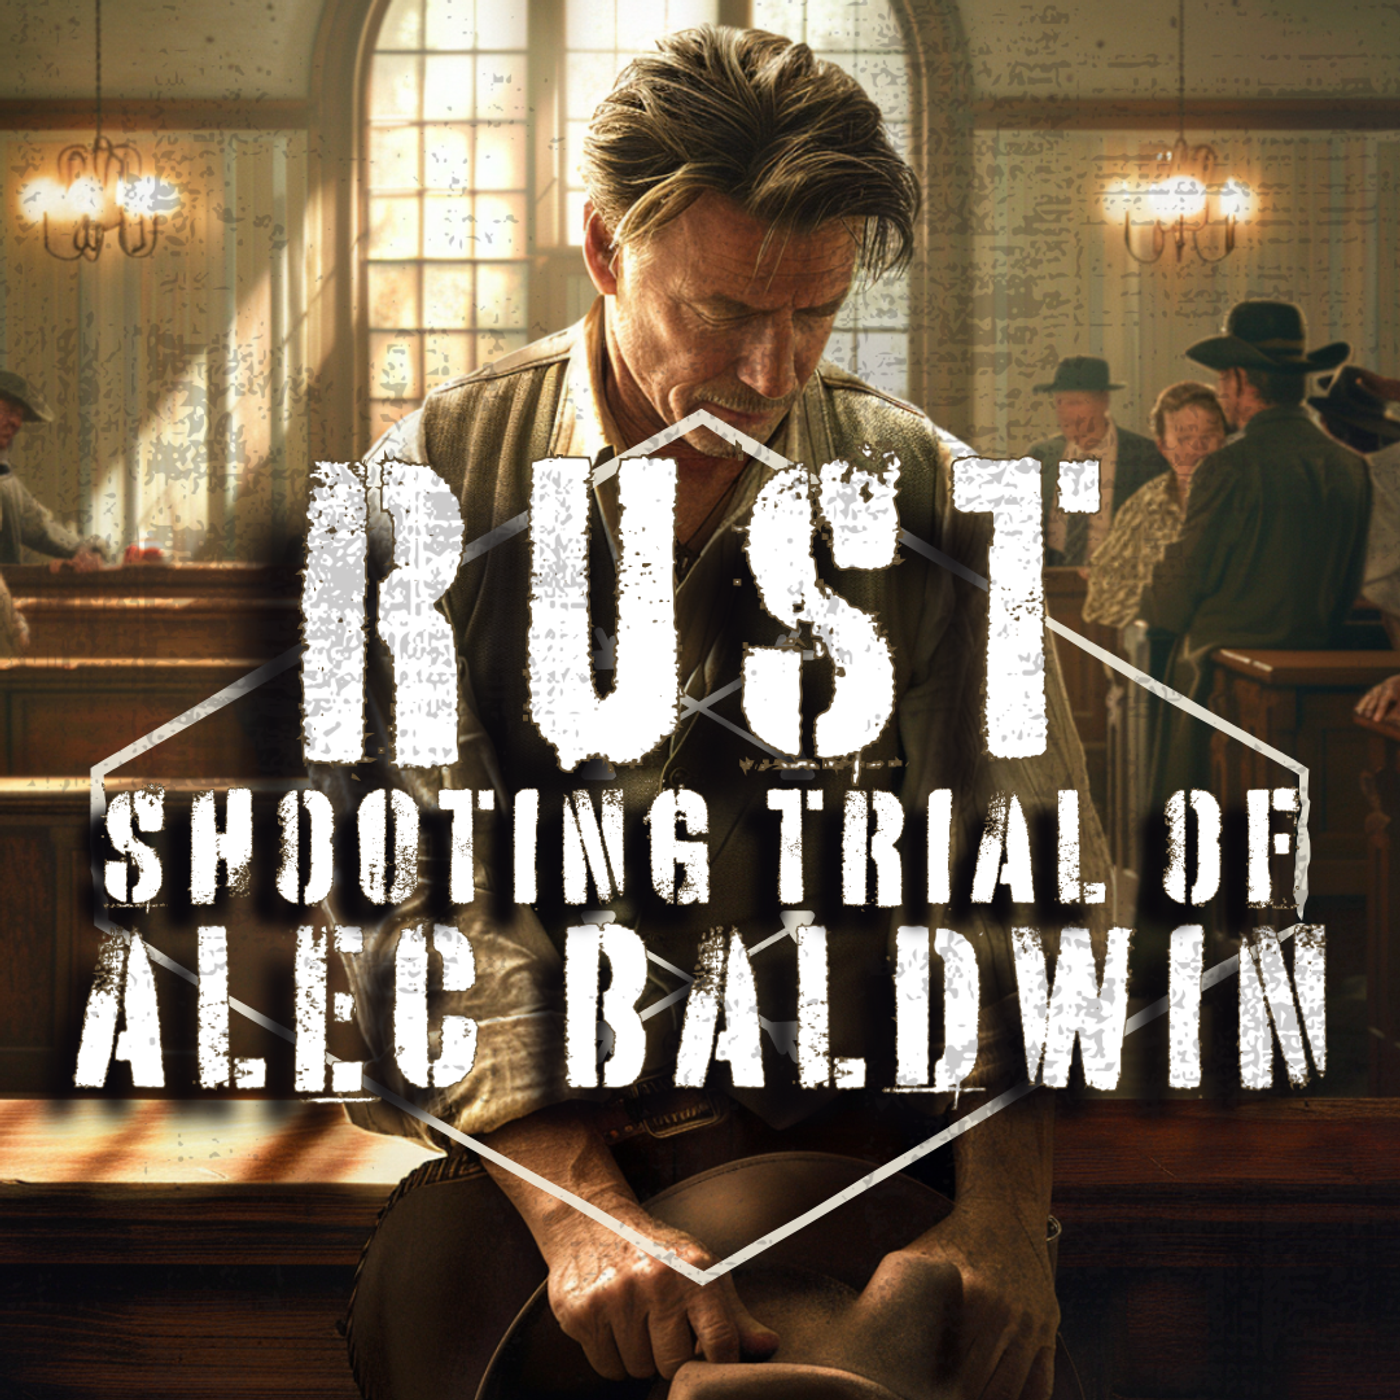 CASE DISMISSED-RUST TRIAL FINAL DAY -NM v. Alec Baldwin Manslaughter Trial- Day 3 Part 1